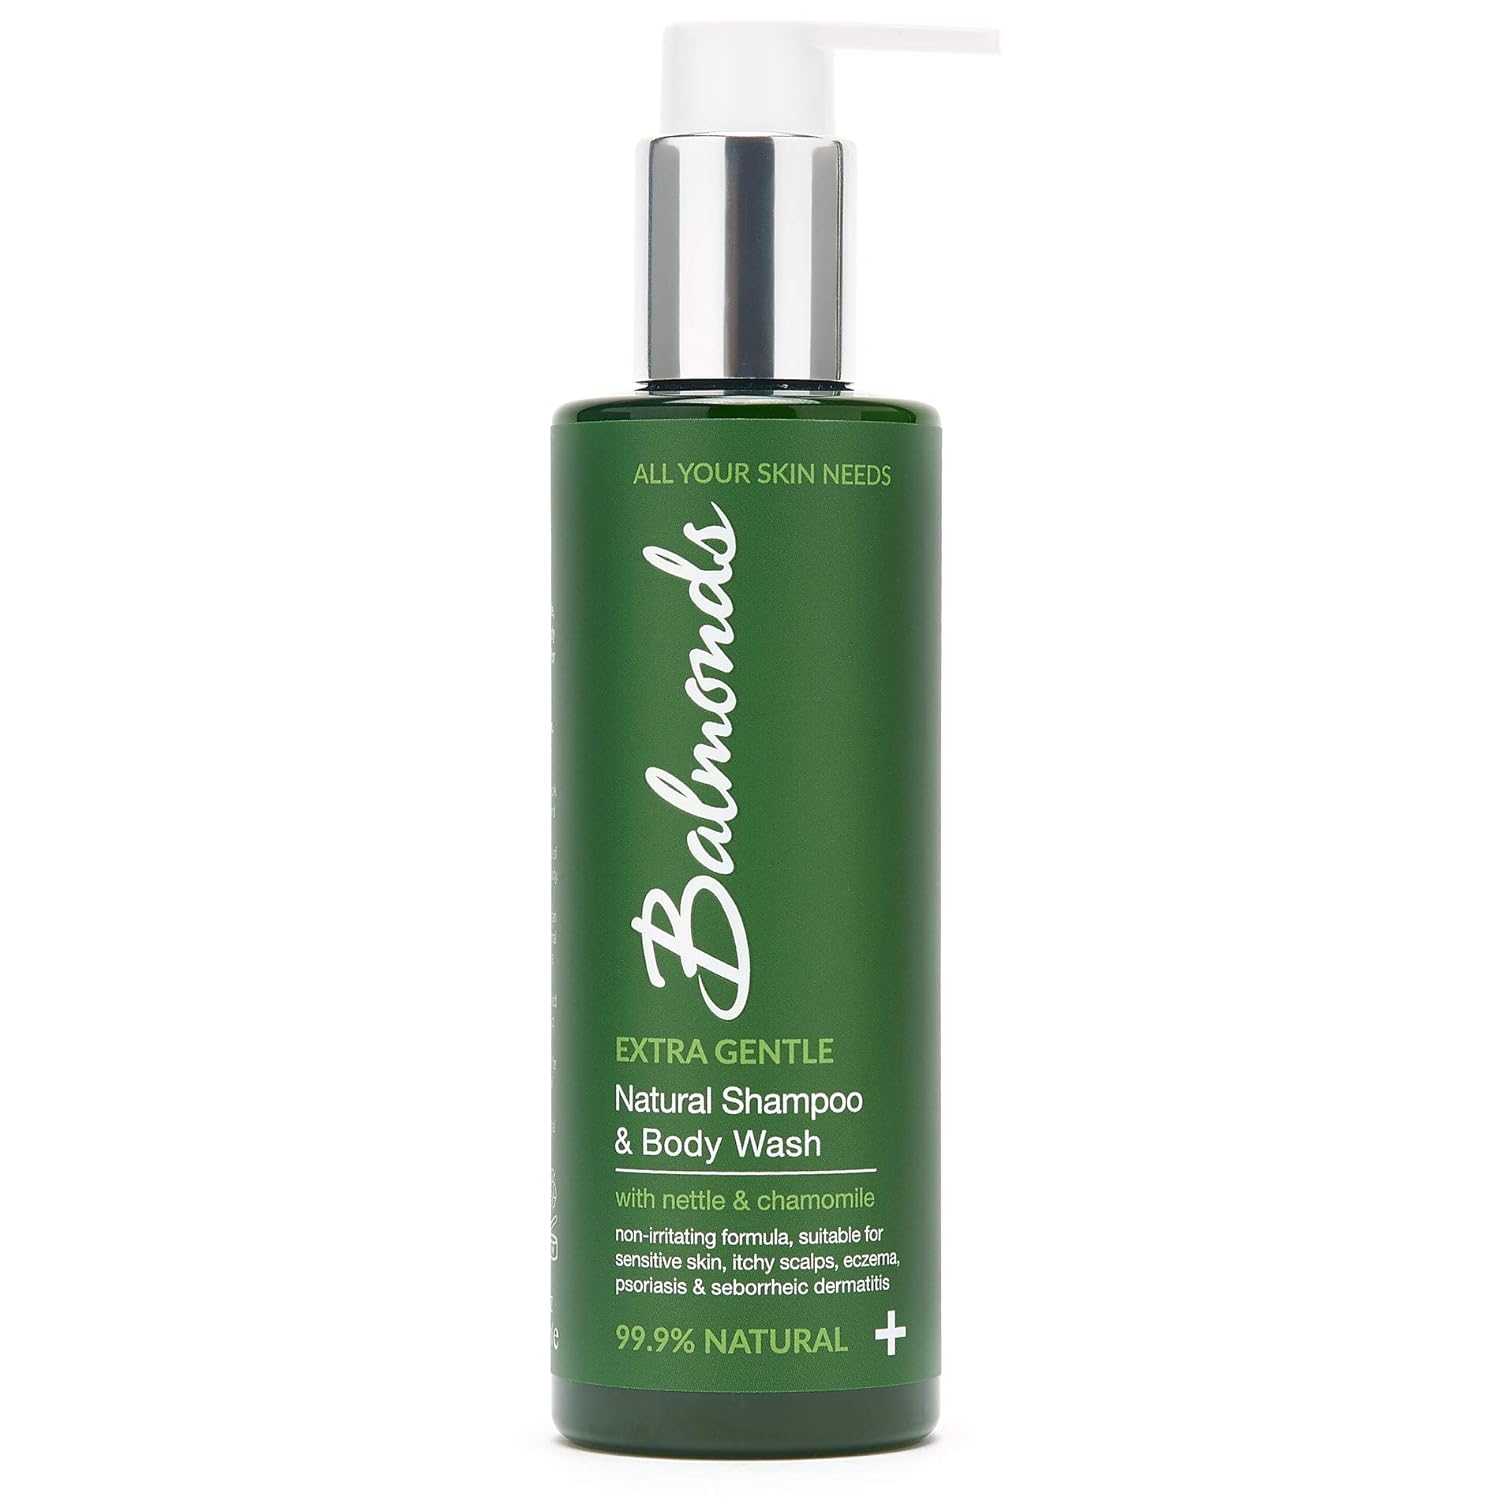 Balmonds Shampoo & Body Wash - 100% Natural Shampoo & Body Wash For Dry & Sensitive Skin, Soap Free Body Wash, Vegan & Cruetly Free (7.1 oz)